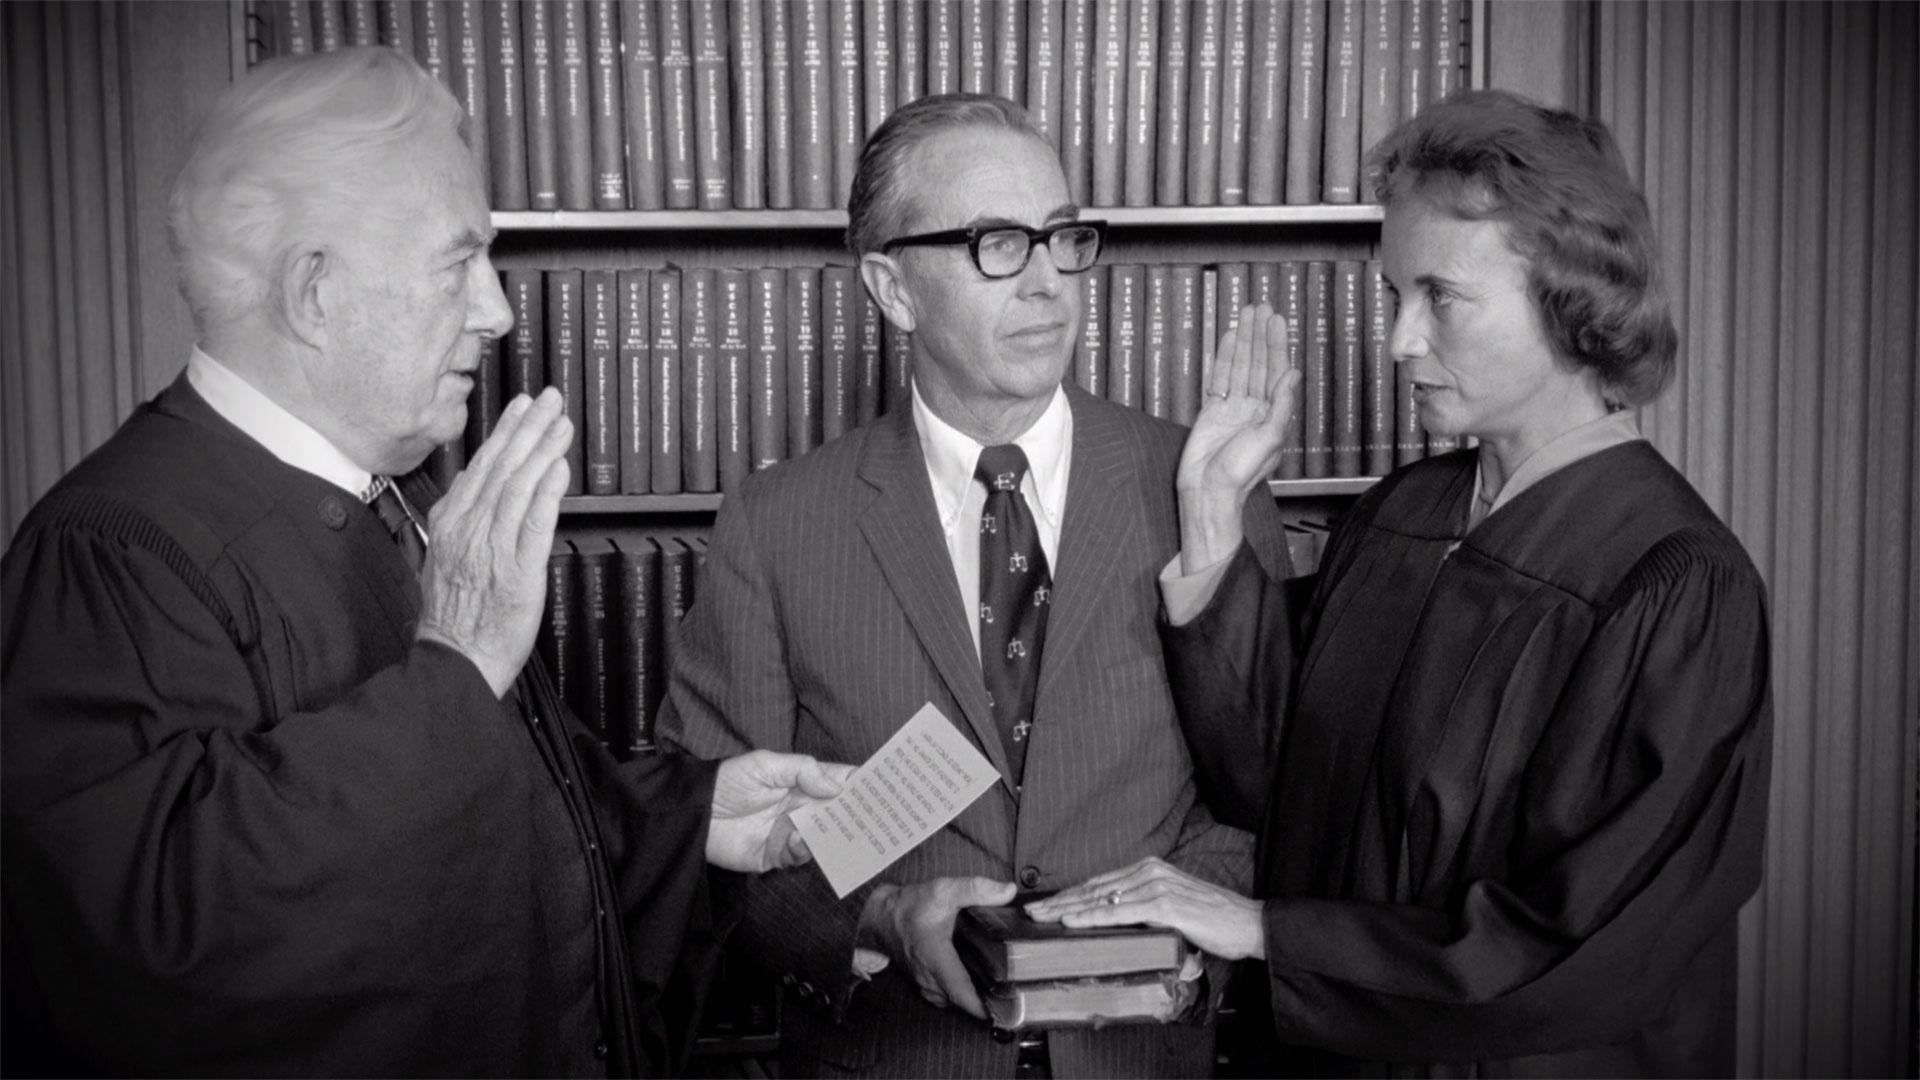 Sandra Day O'Connor getting sworn into the Supreme Court in black and white.